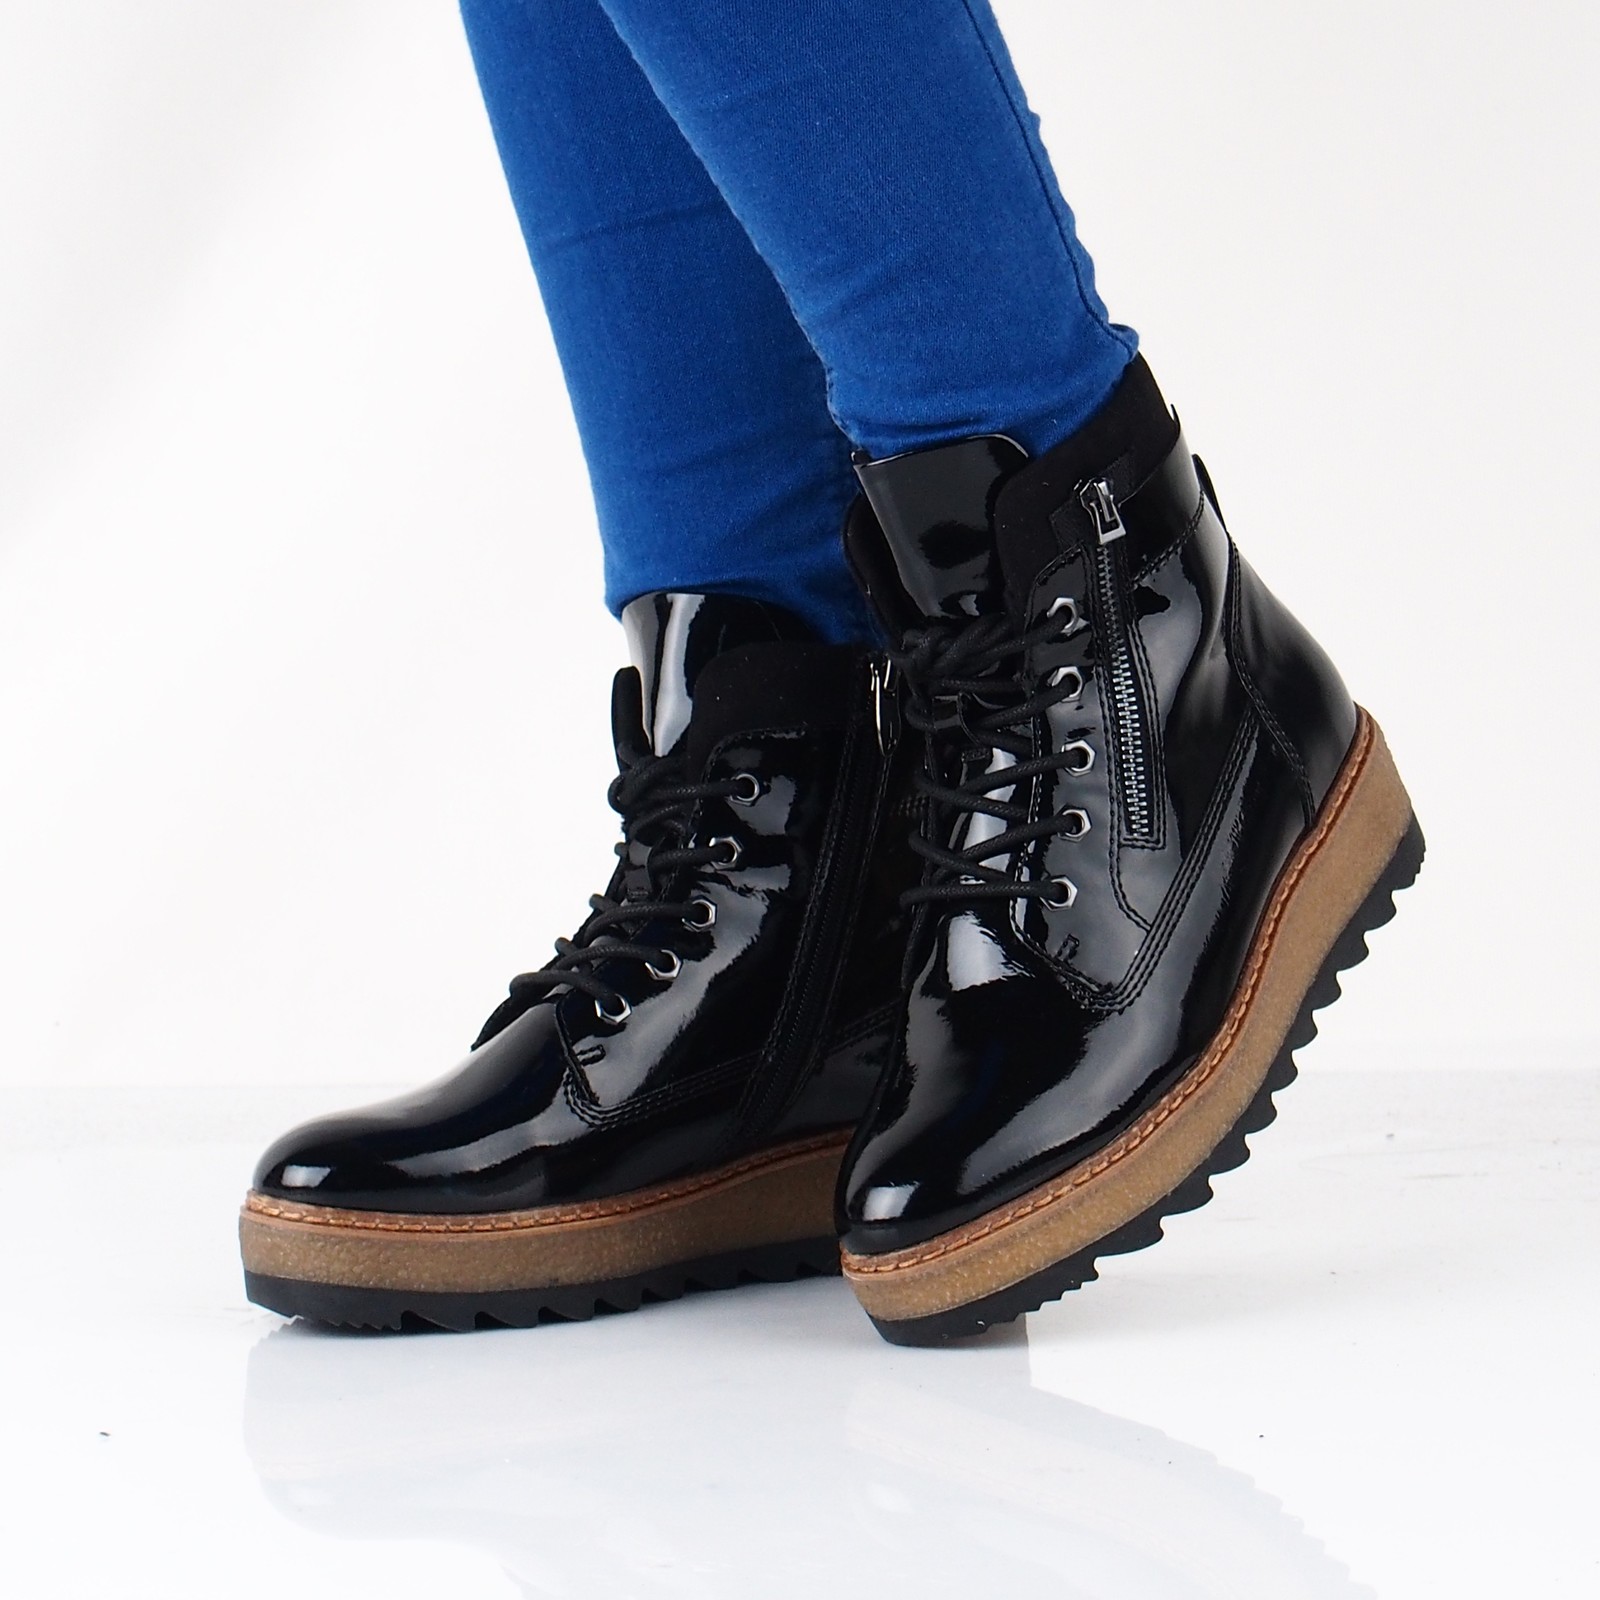 Tamaris shiny boots - black | Robel.shoes